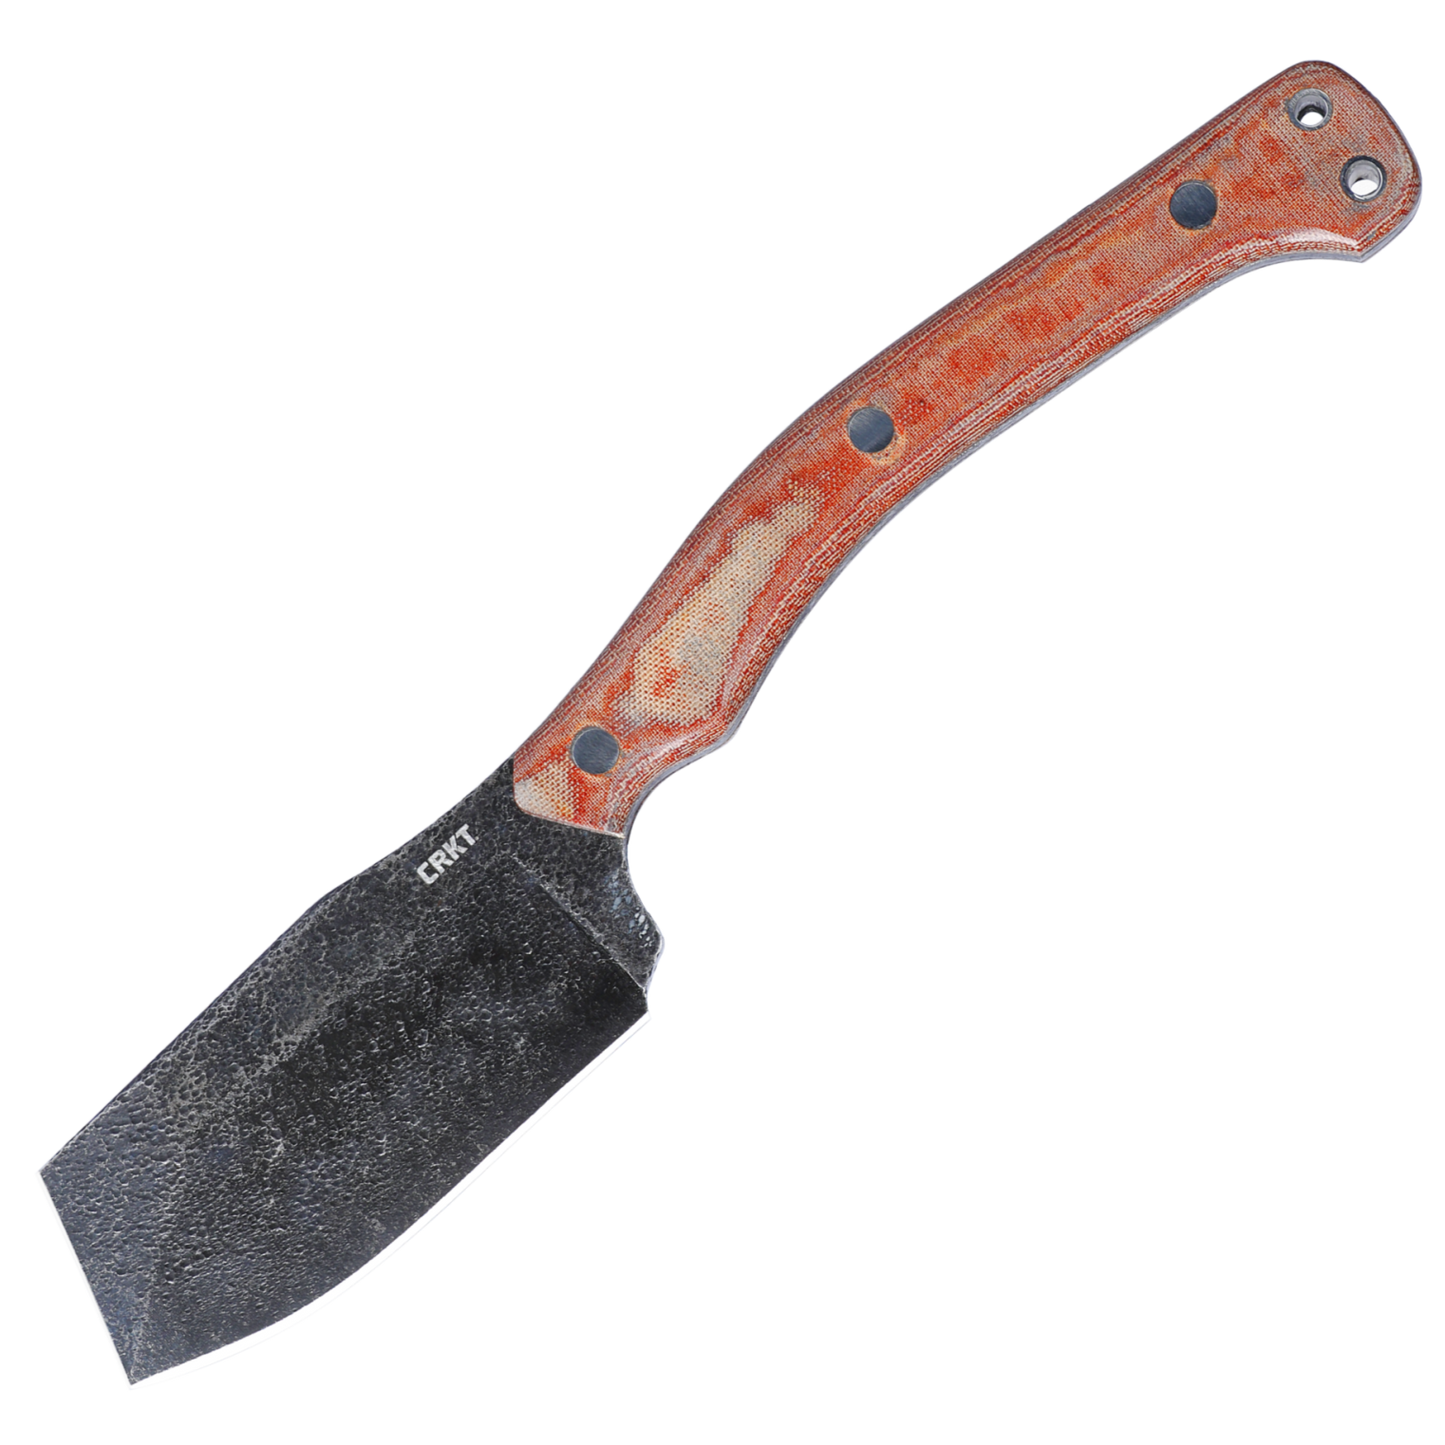 CRKT Razel Nax 11" 1075 Black Stonewash Fixed Blade Knife/Axe - John Graham Design - 2014